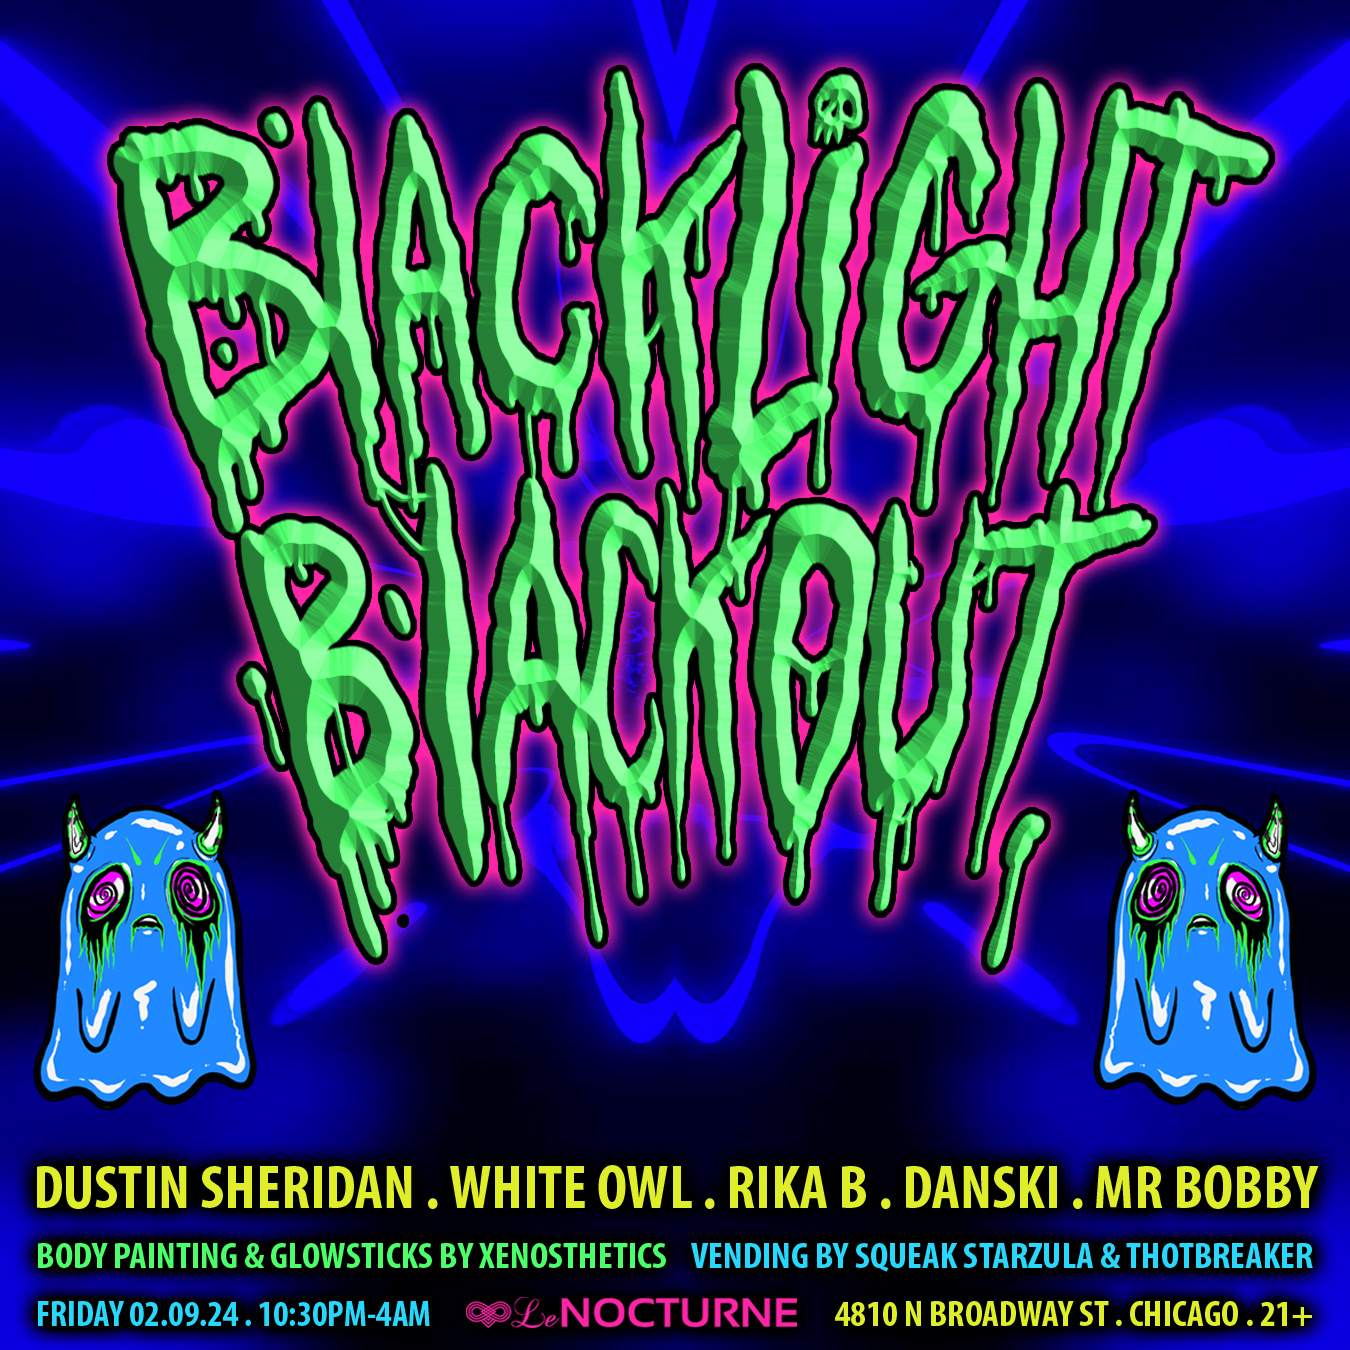 Blacklight Blackout feat. Dustin Sheridan, White Owl, Rika B, Danski and Mr Bobby - Página frontal